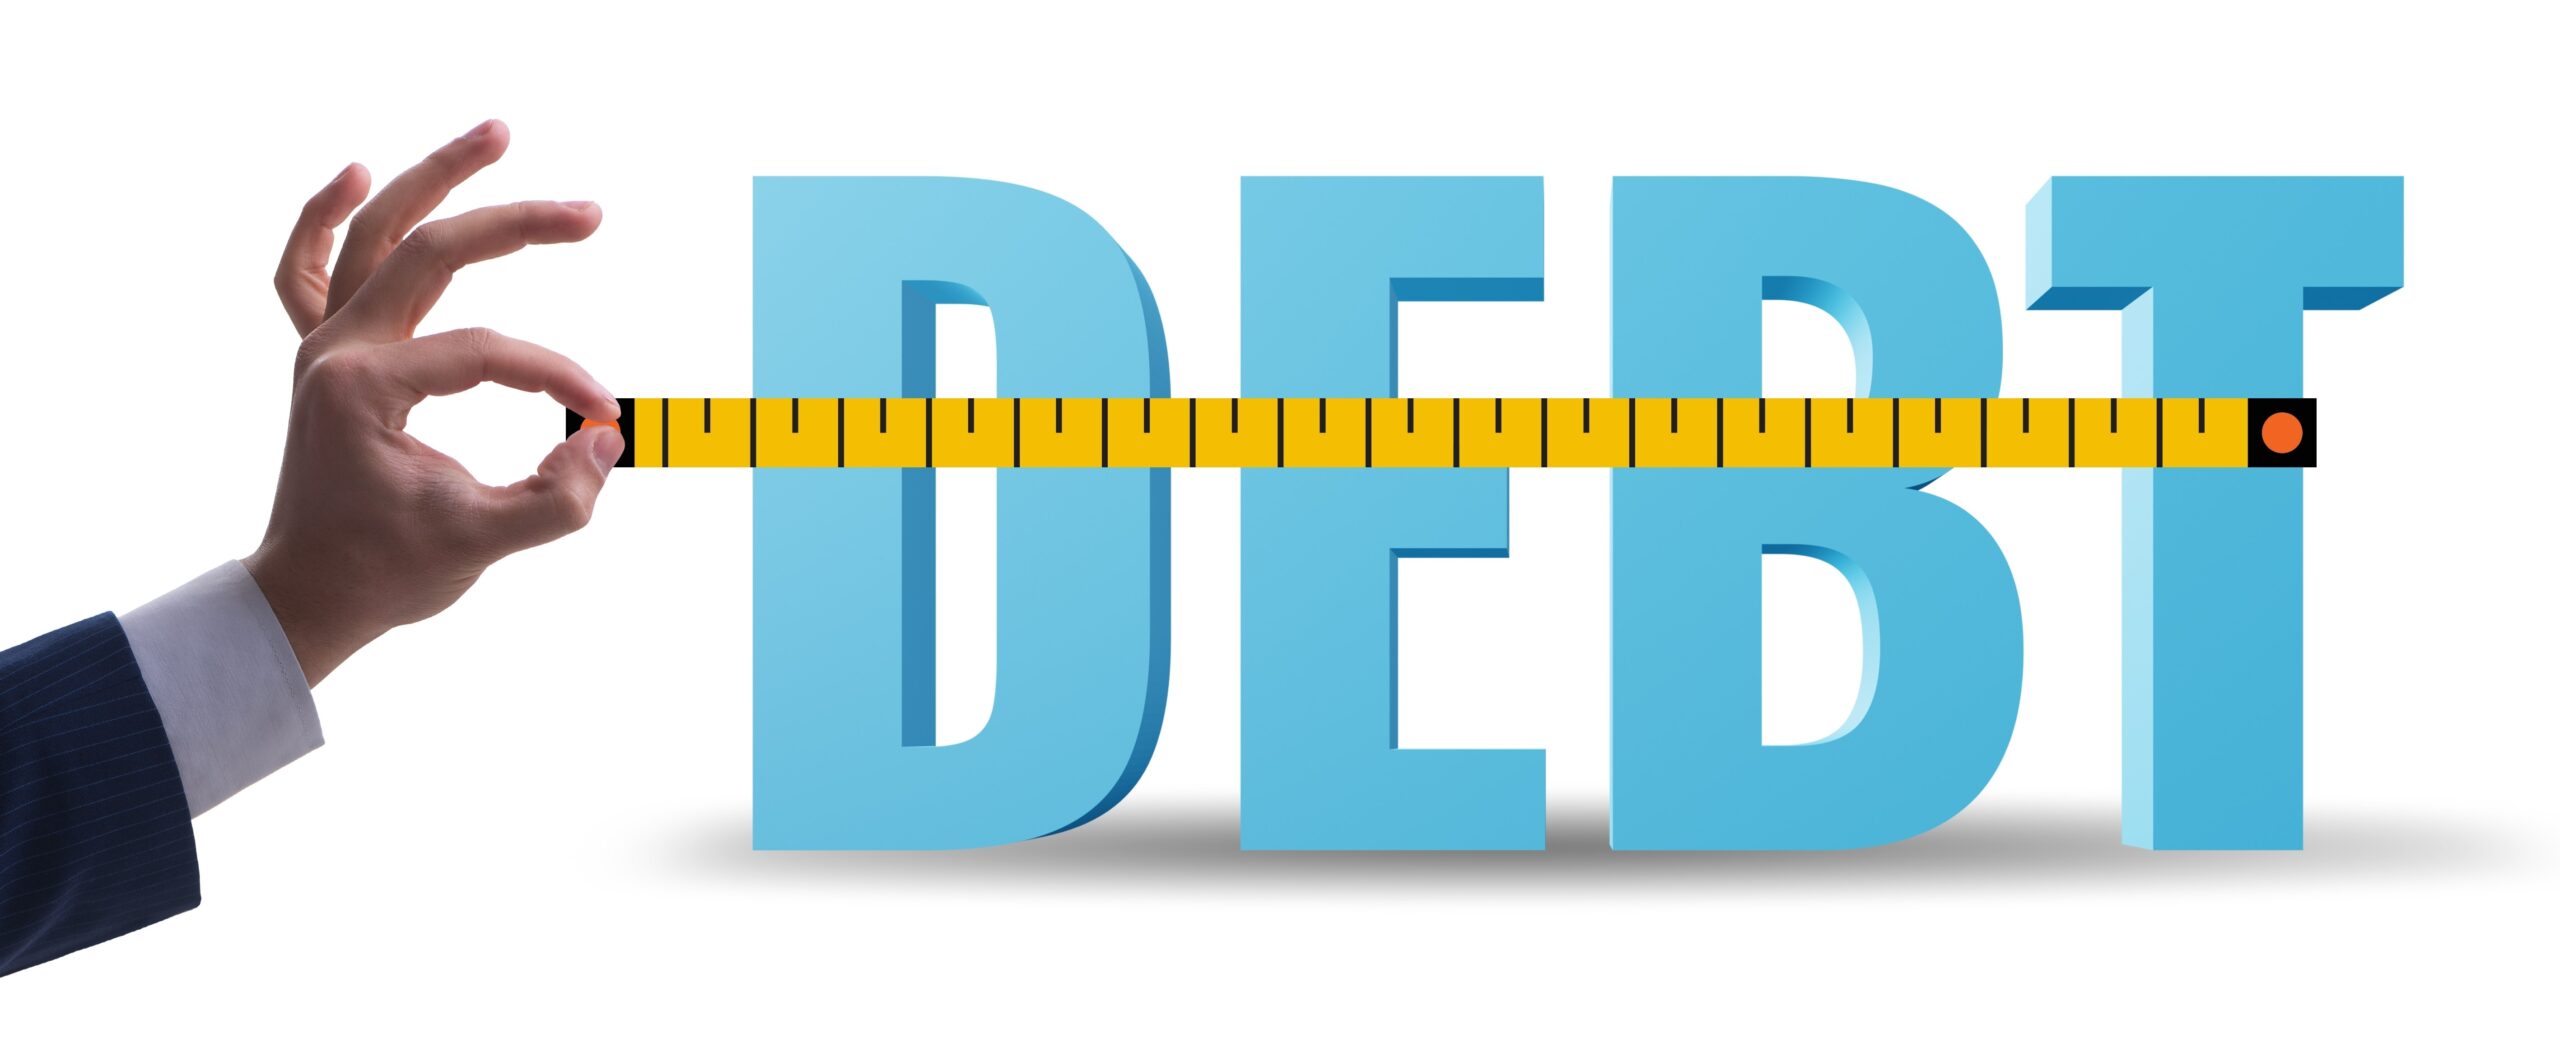 Measure your debt